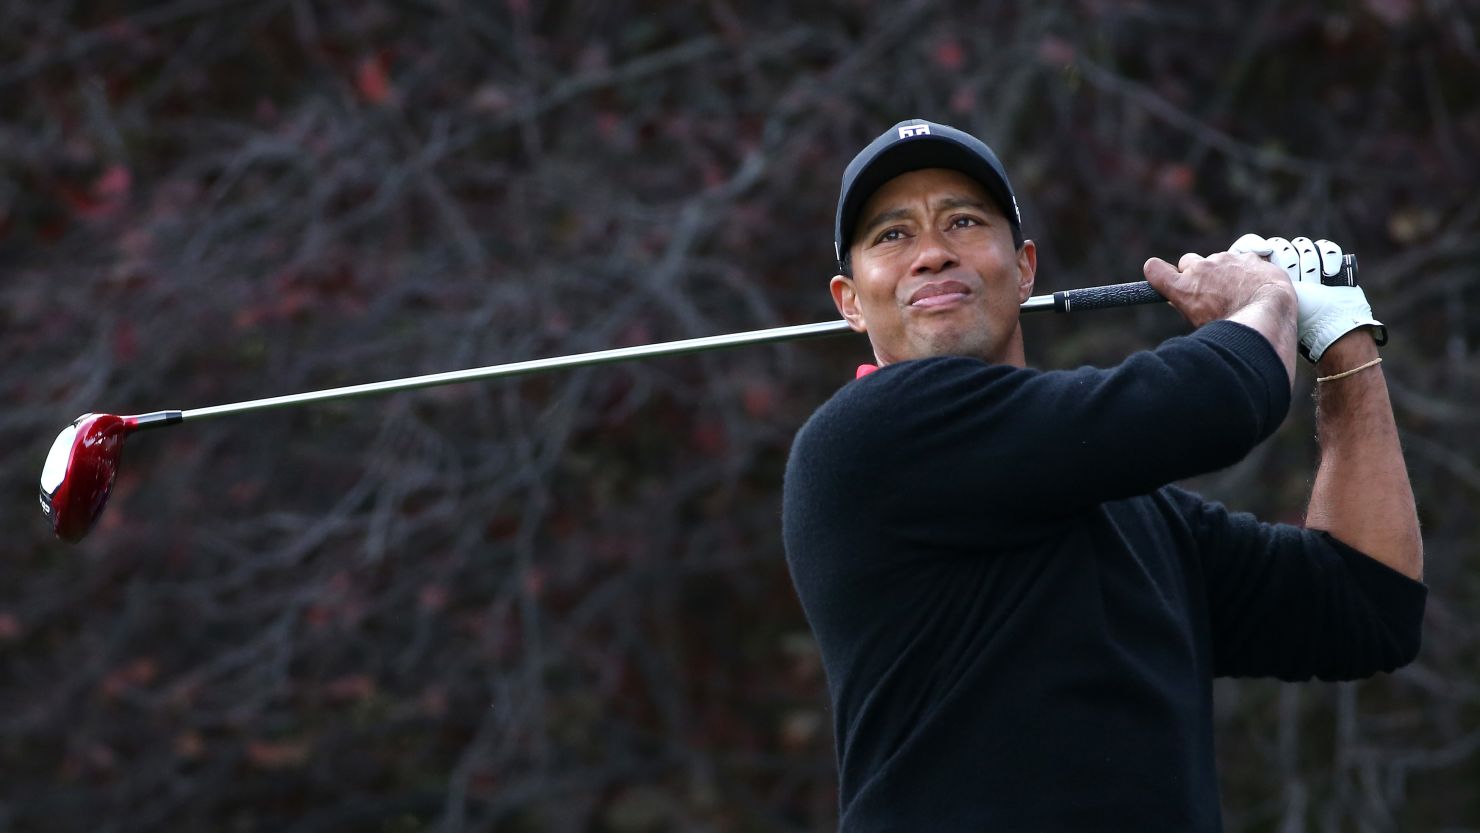 Golf's world No. 1 Tiger Woods begins his 2014 PGA Tour season in California on Thursday.